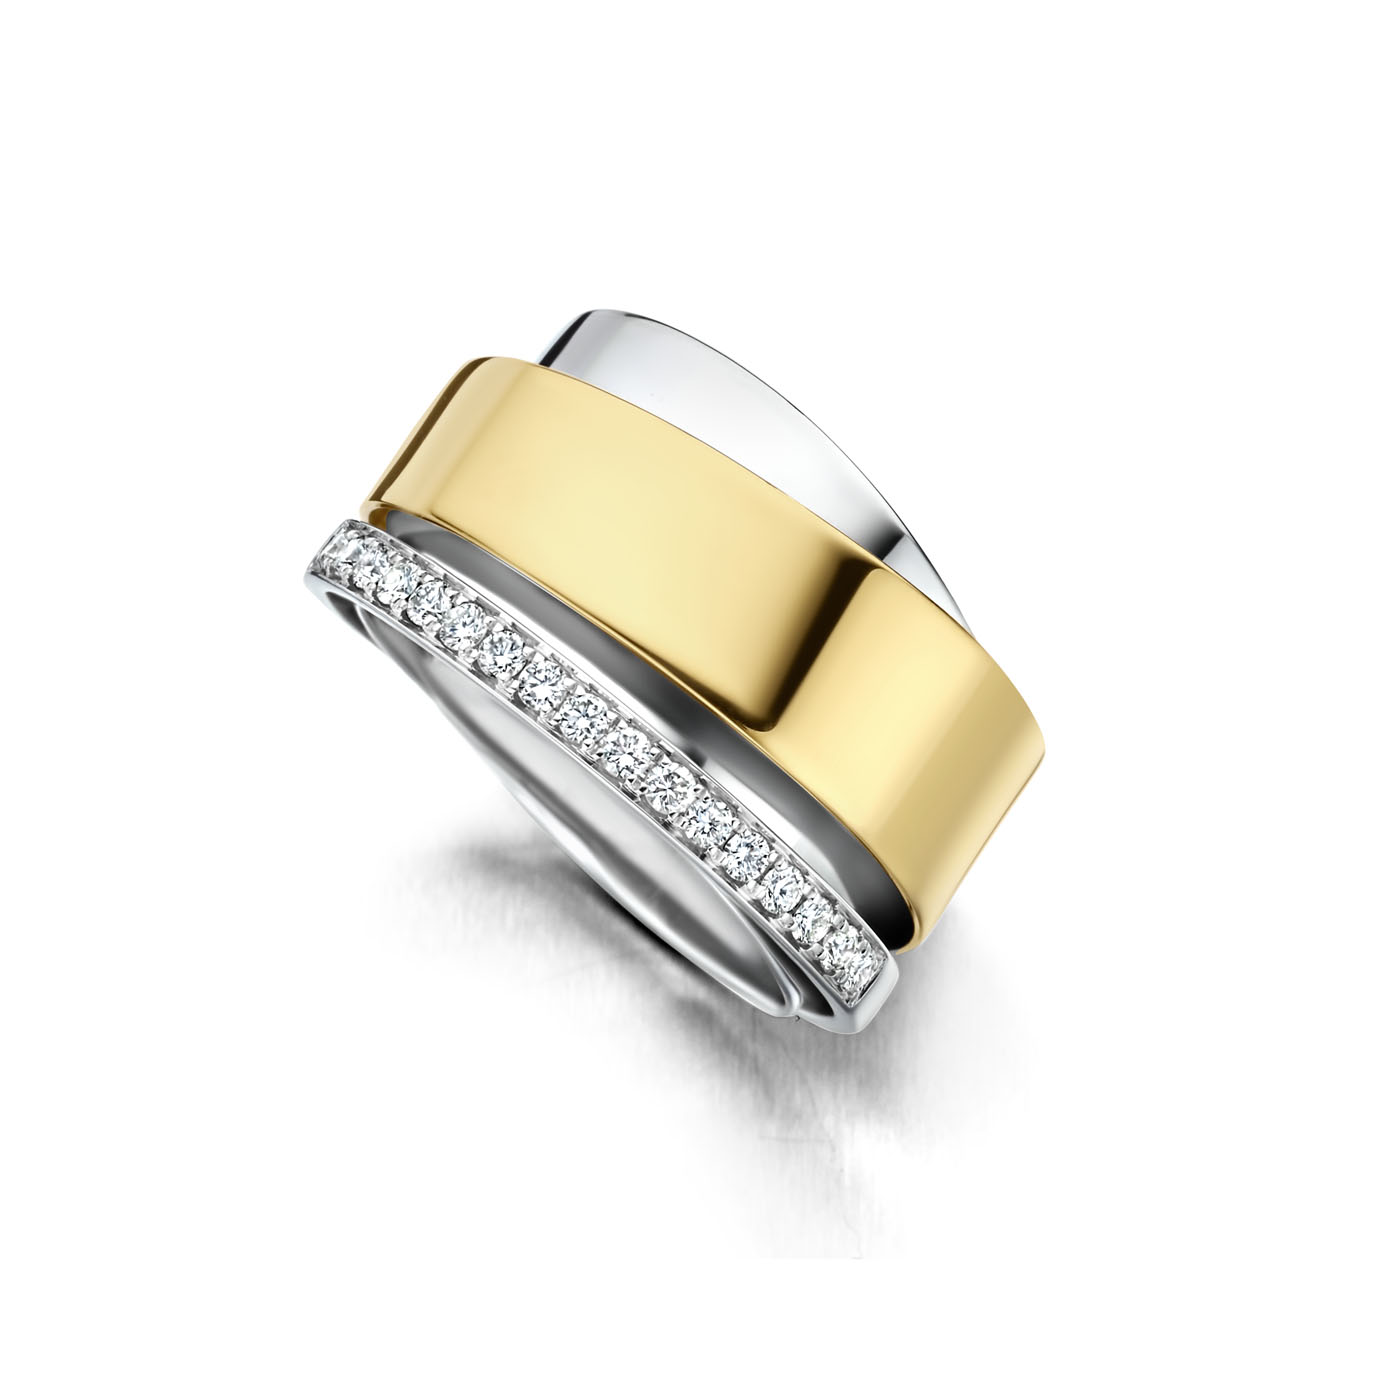 Grace jewellery ring